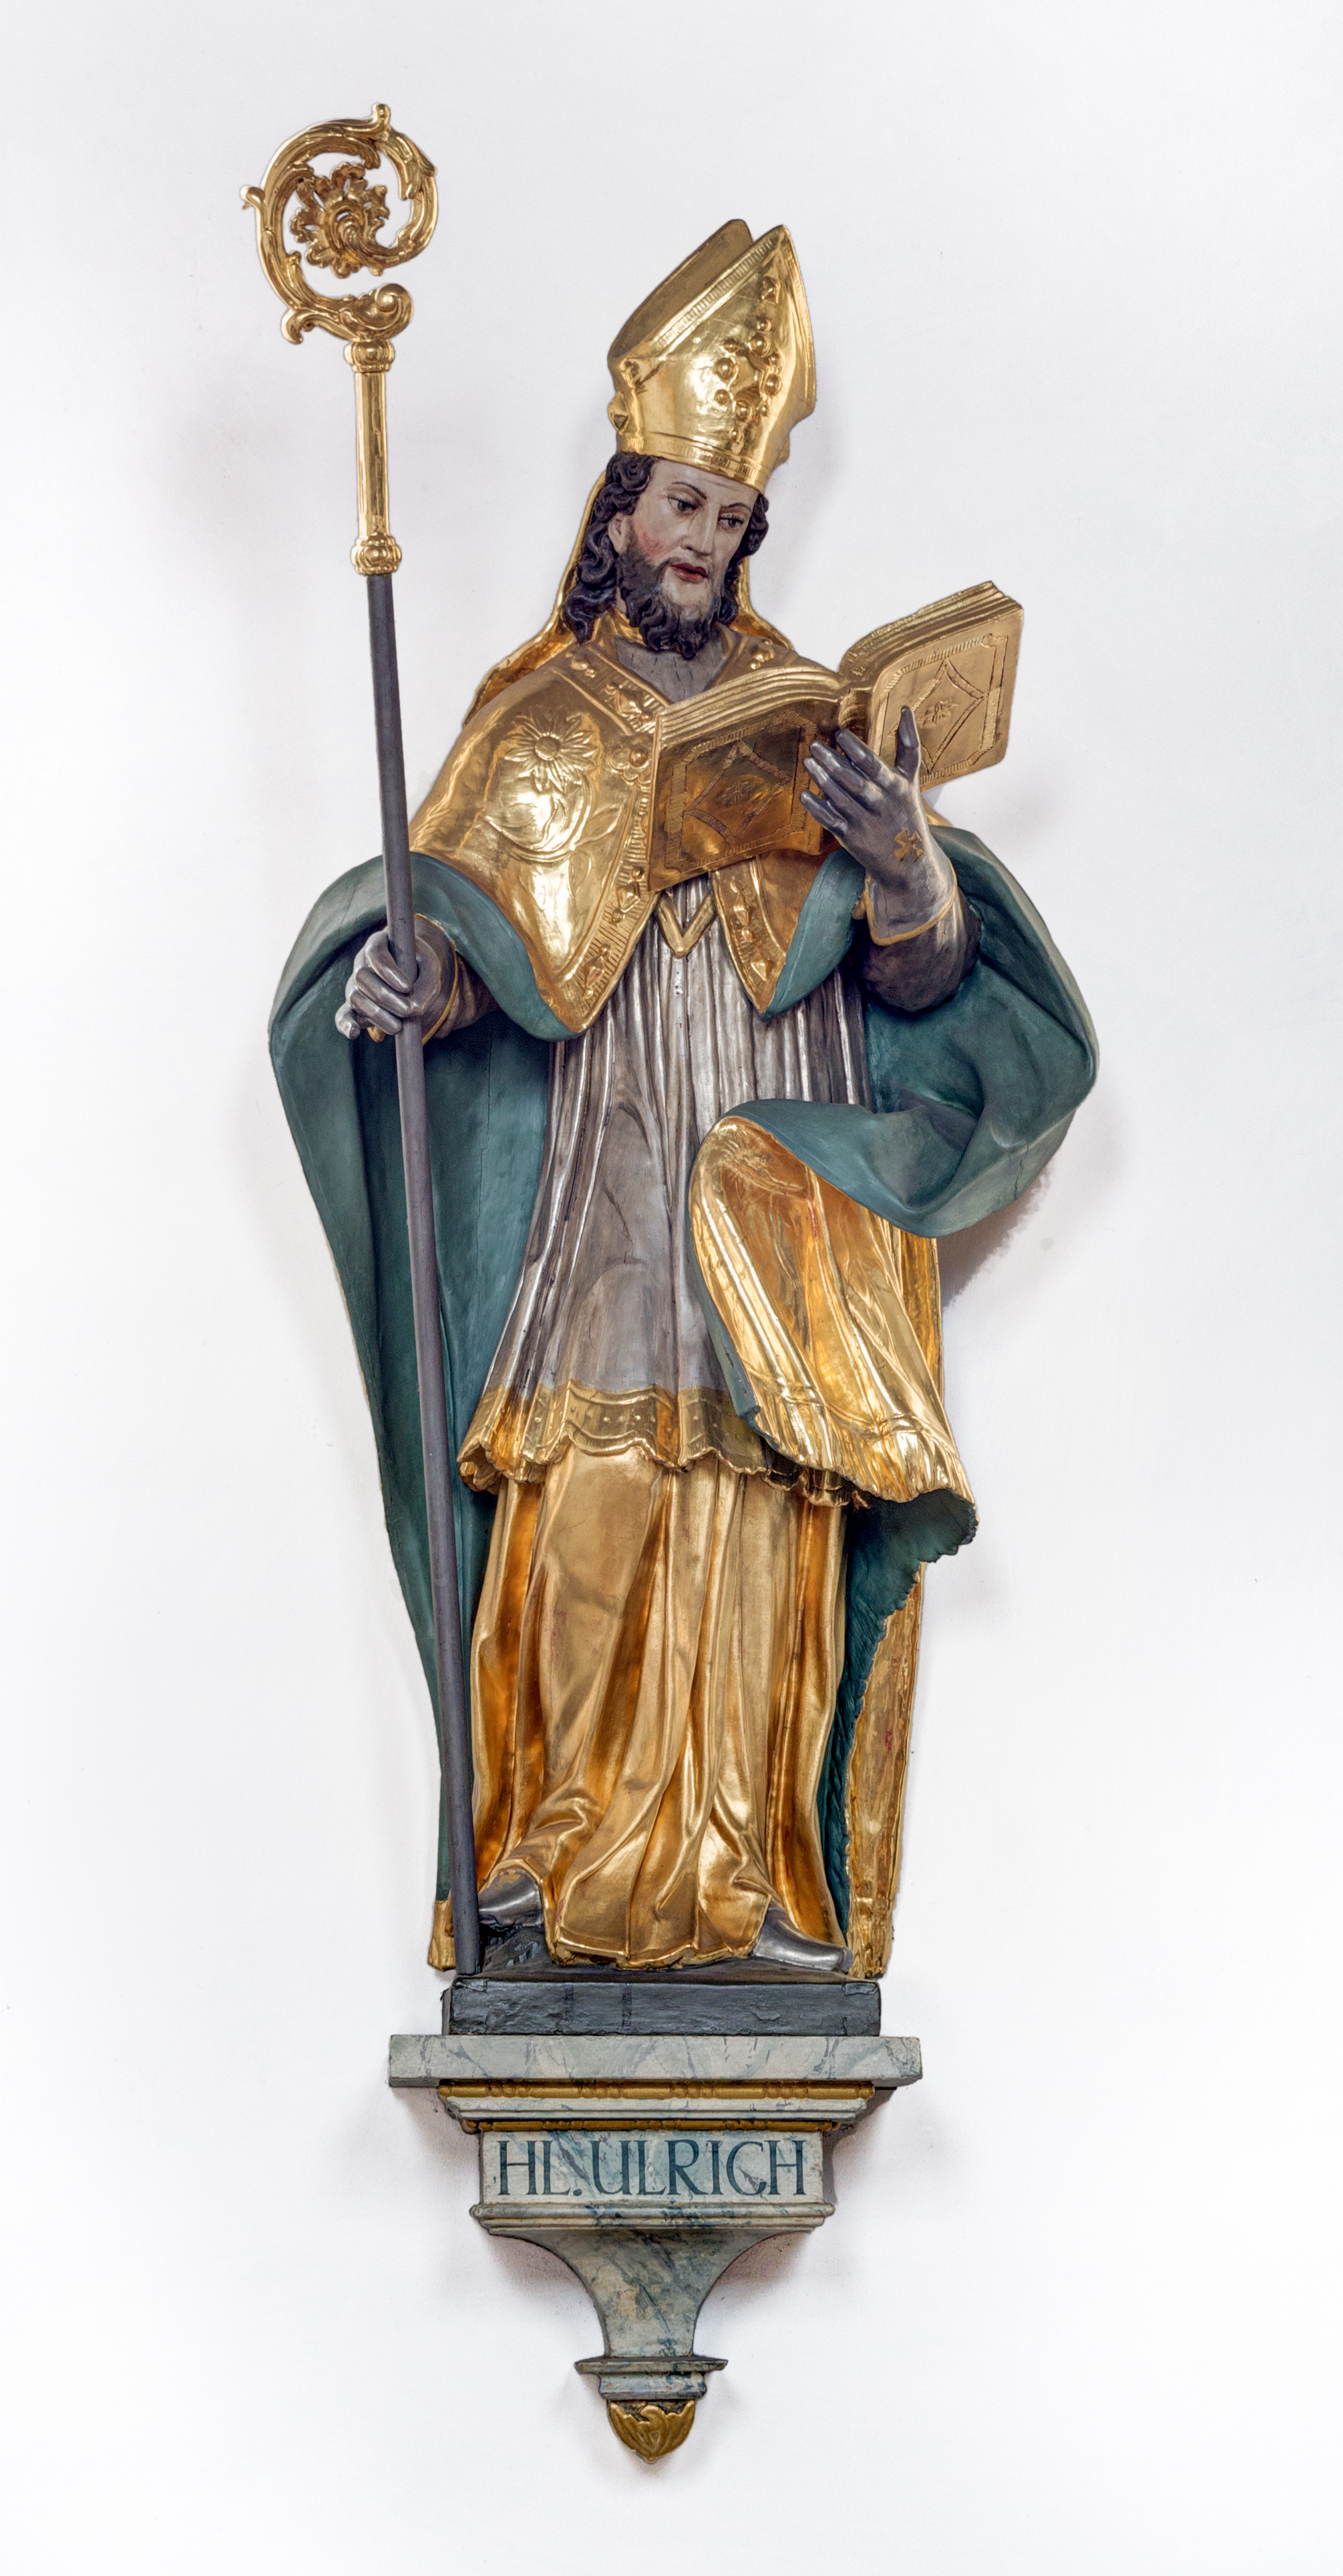 Amlingstadt-St.Ulrich-statue-HDR-1010092